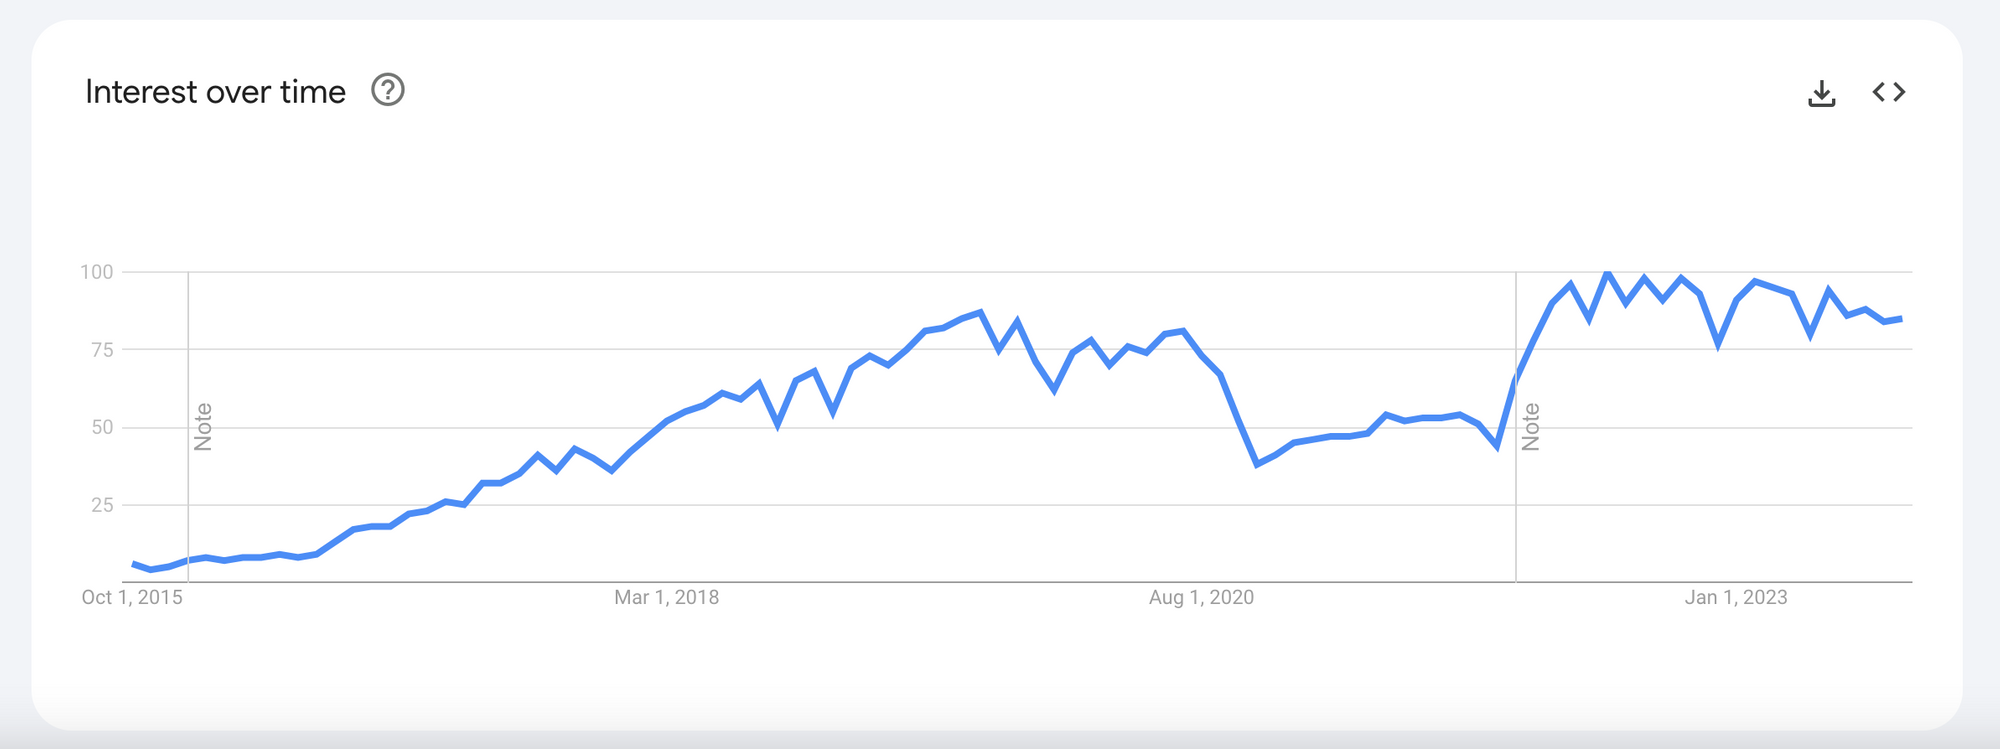 GraphQL Interest over time